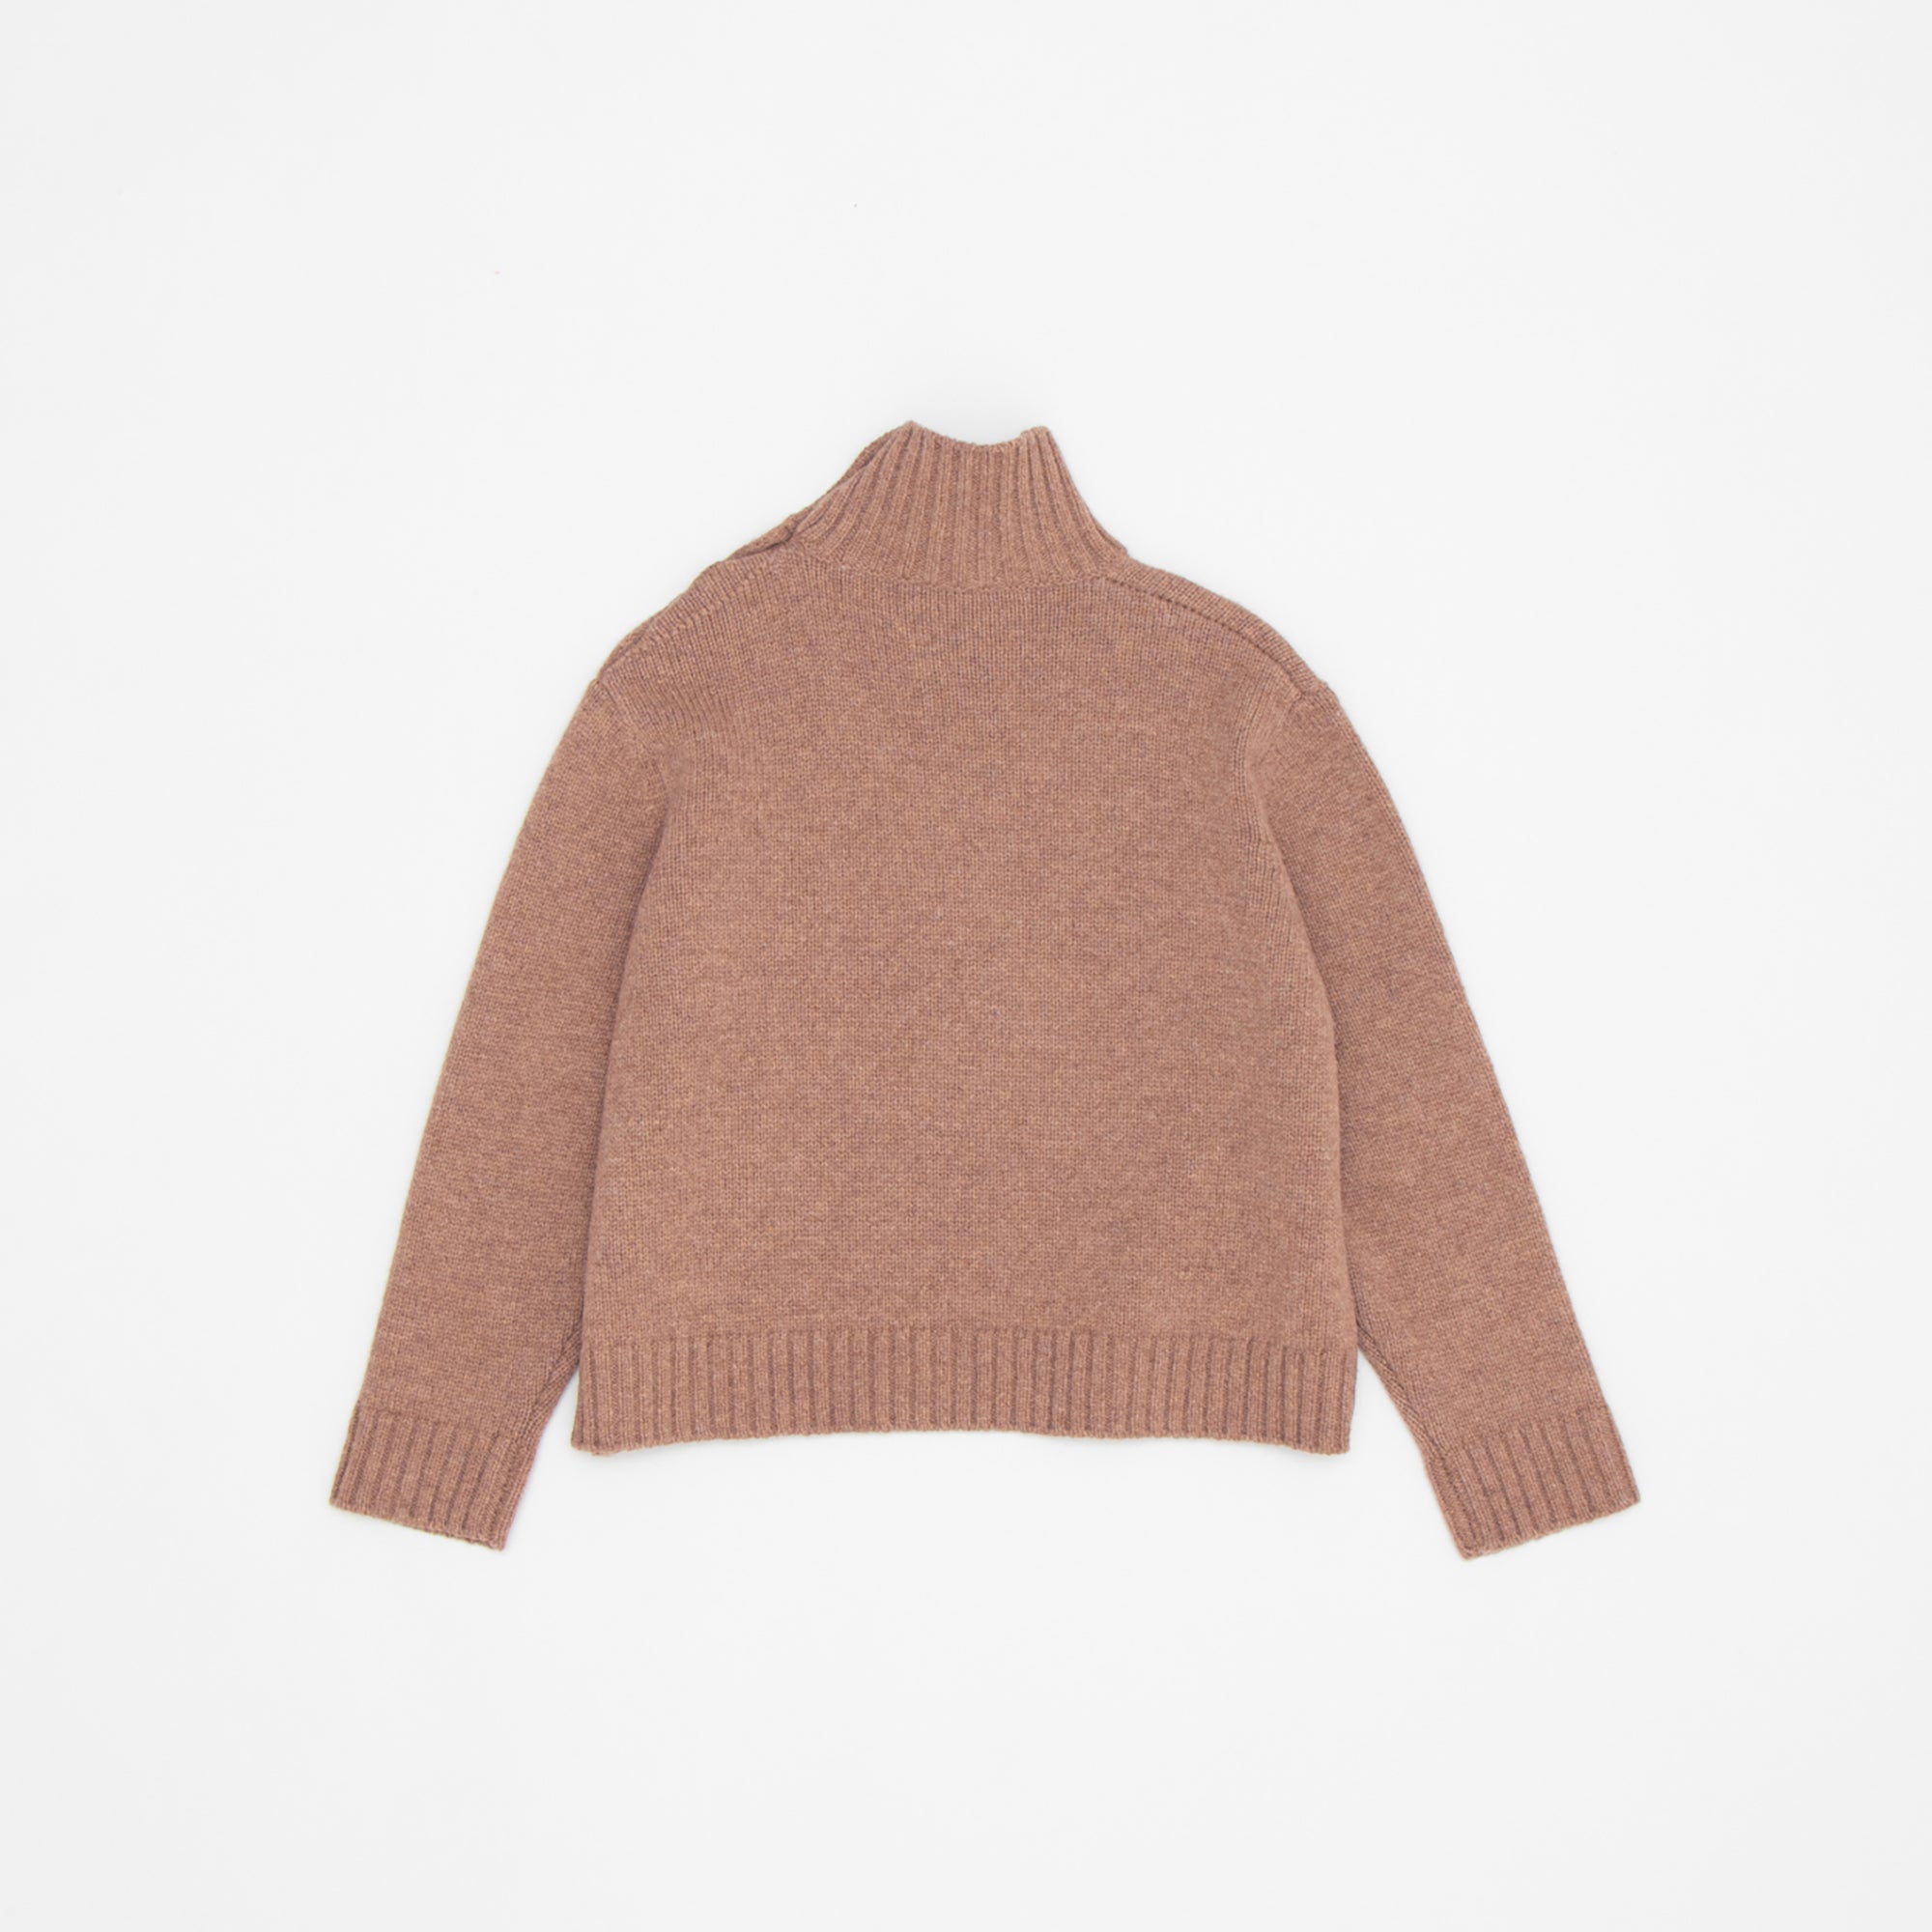 Boys & Girls Camel Wool Sweater